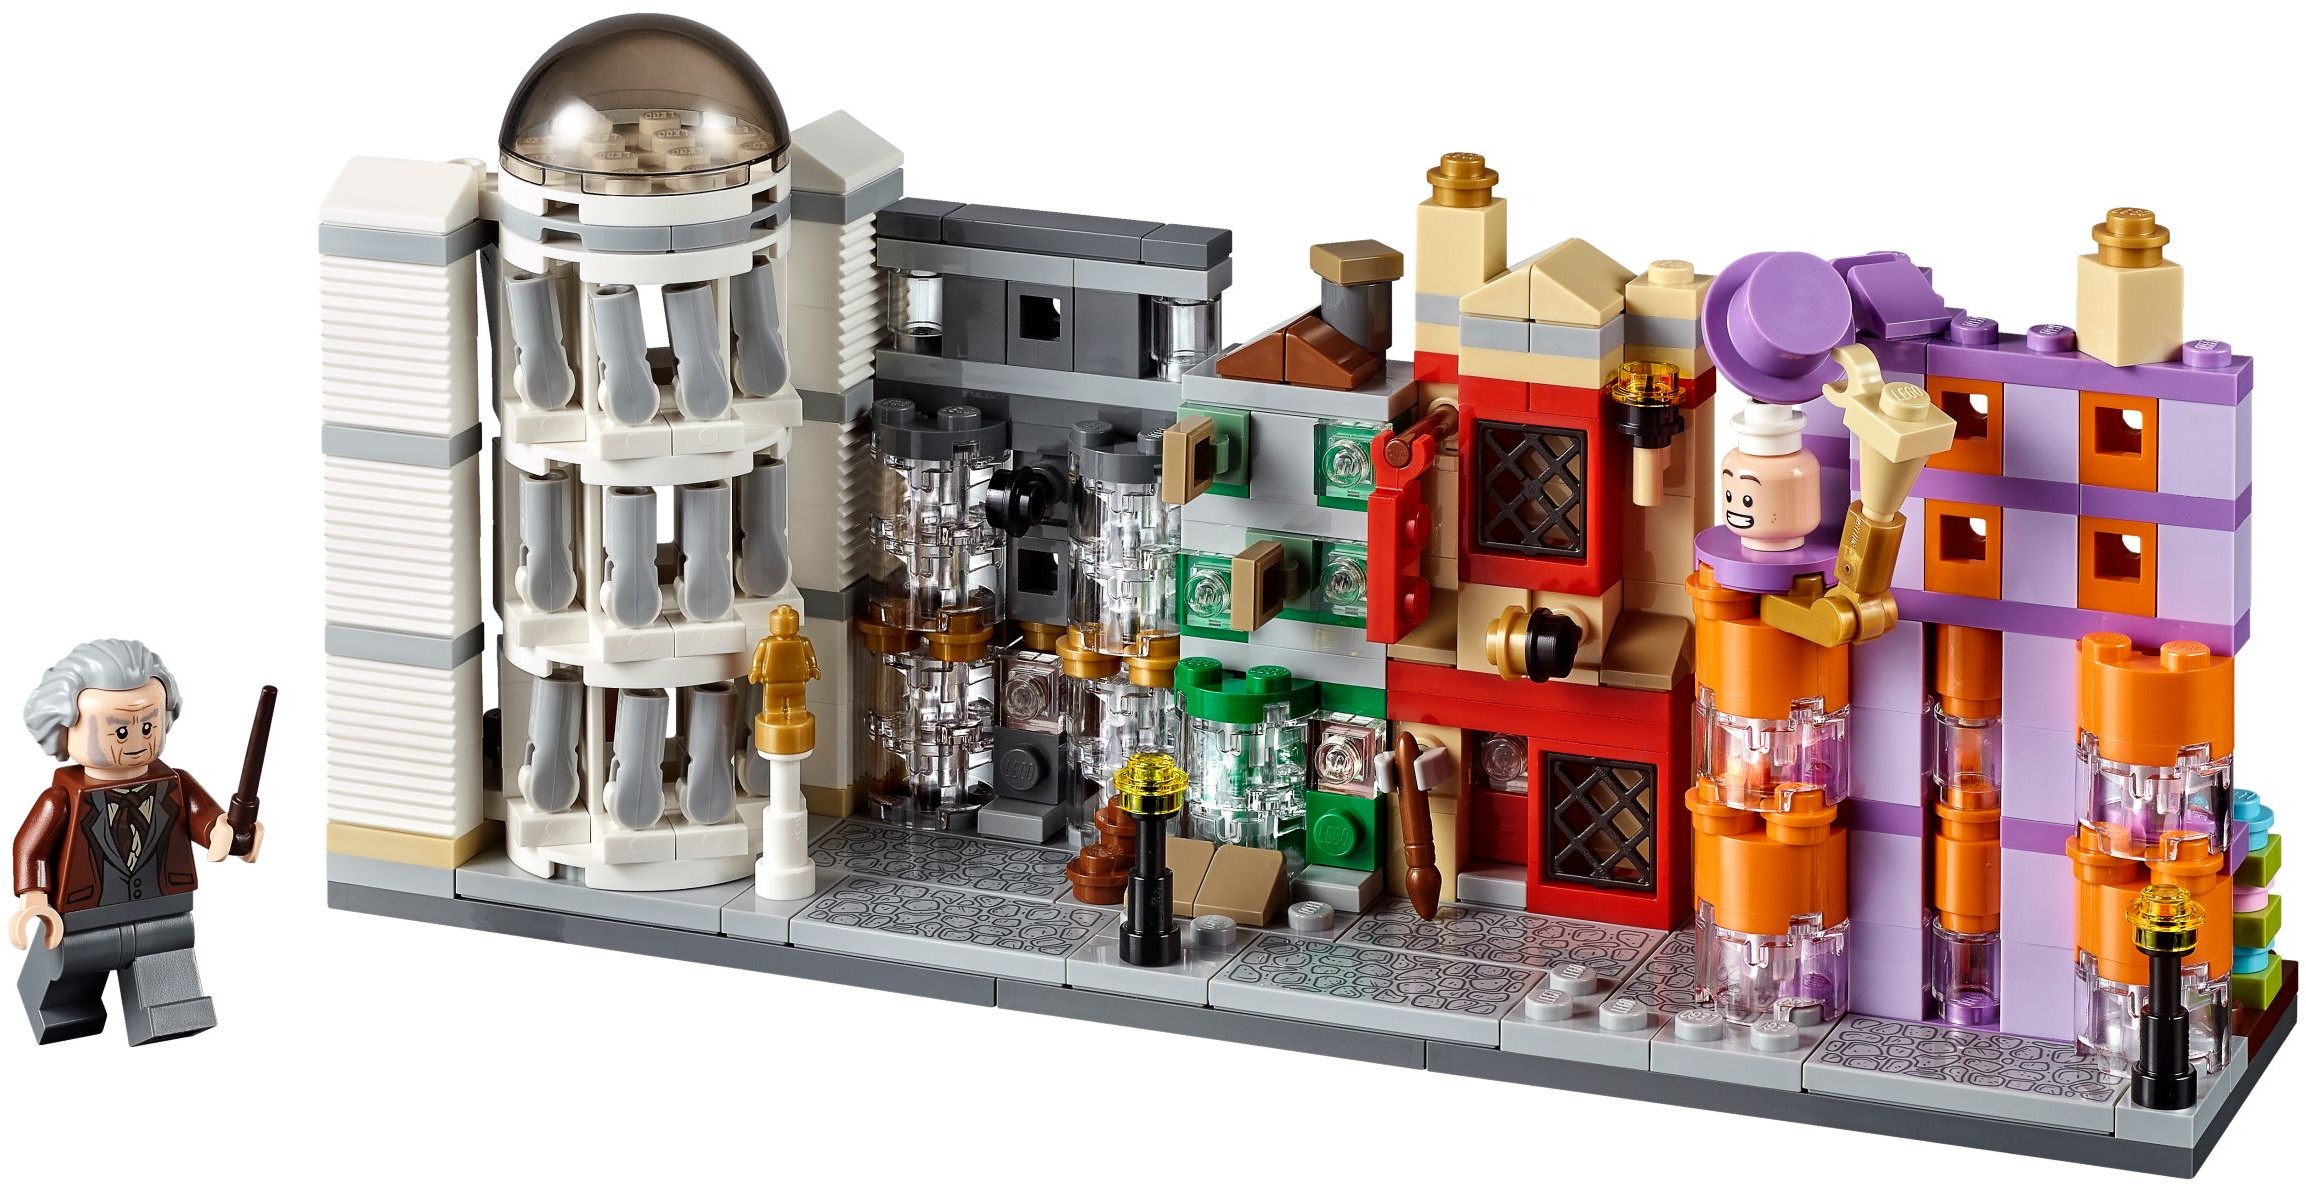 Lego 5005254 - Harry Potter Minifigure Collection (Bricktober 2018)